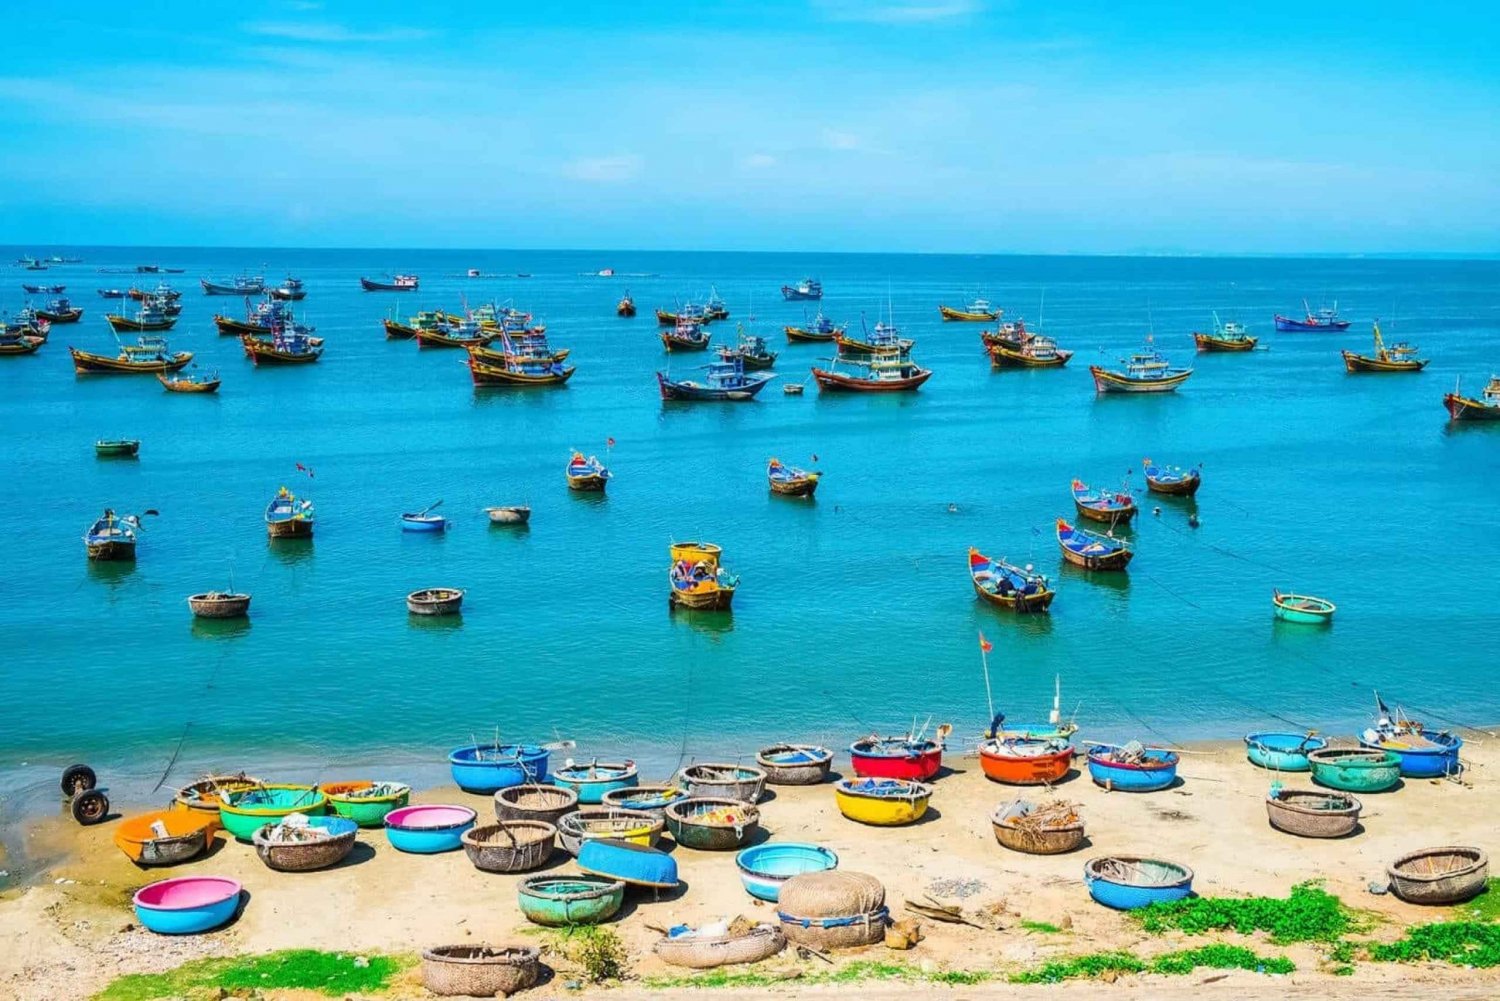 6-daags Zuid-Vietnam | Mekong Delta Cu Chi Mui Ne Phu Quoc